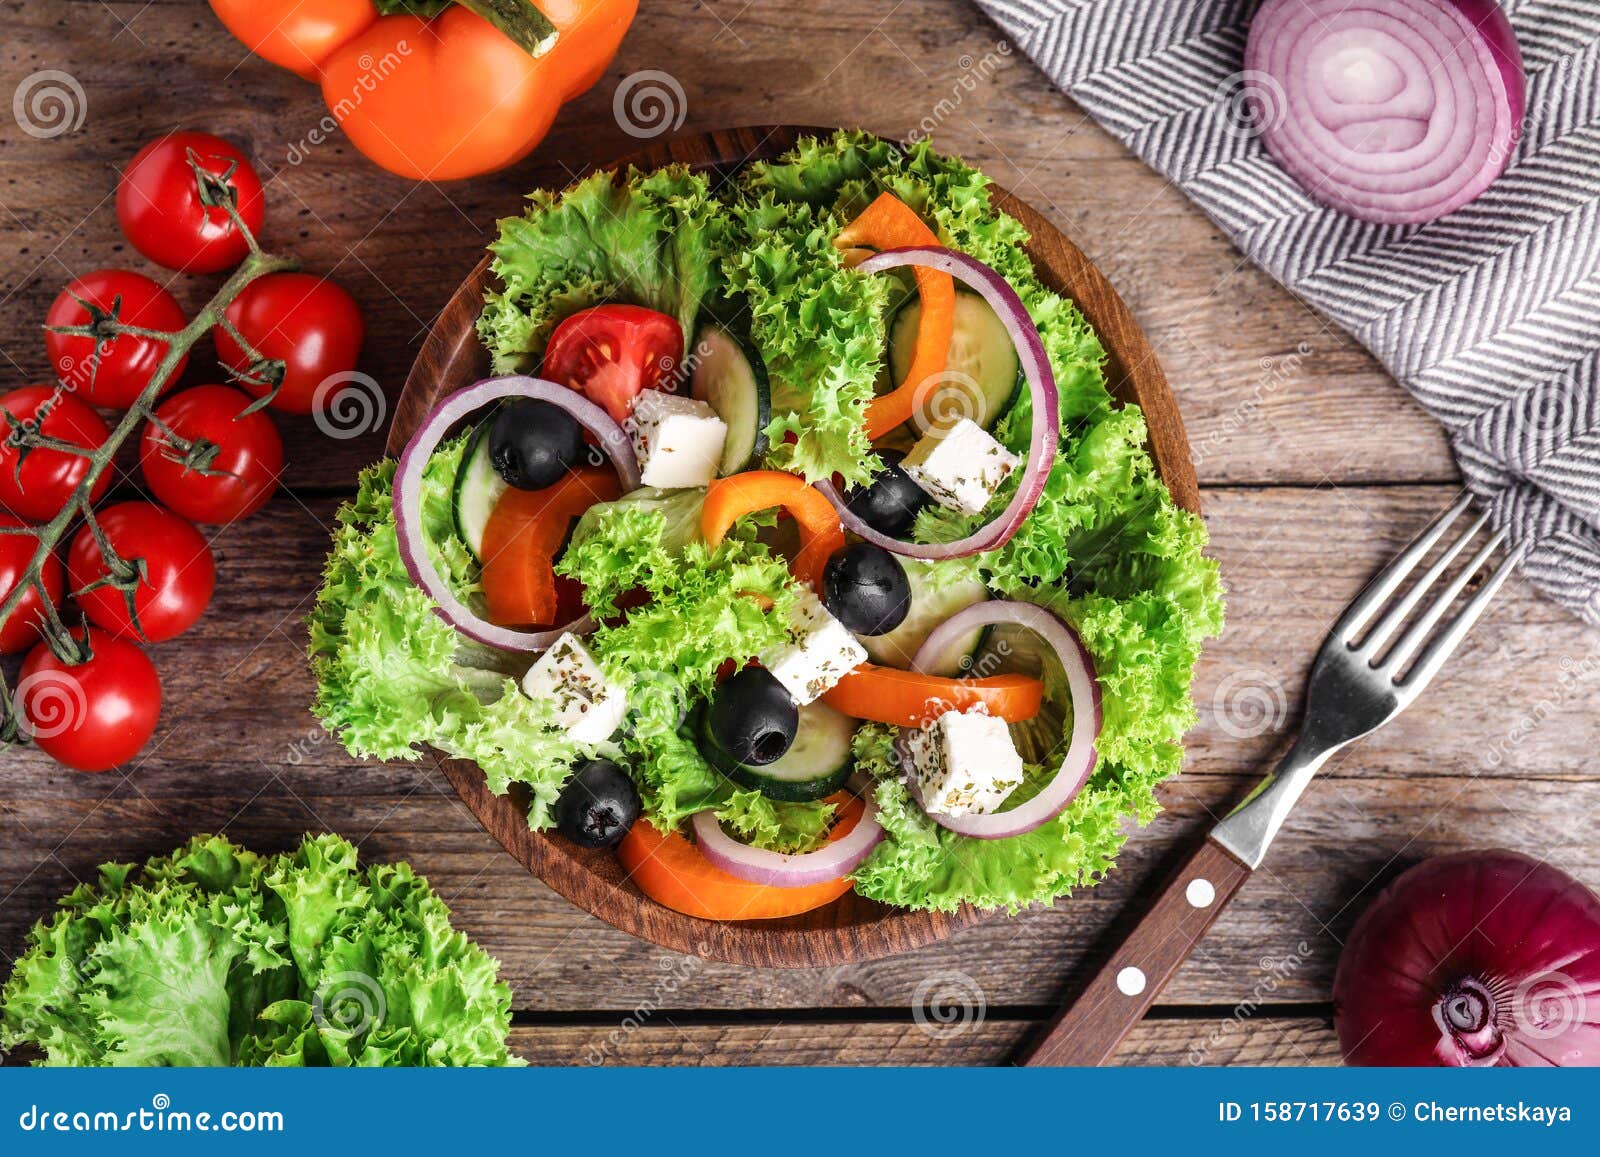 Tasty Fresh Greek Salad on Wooden Table Stock Image - Image of diet ...